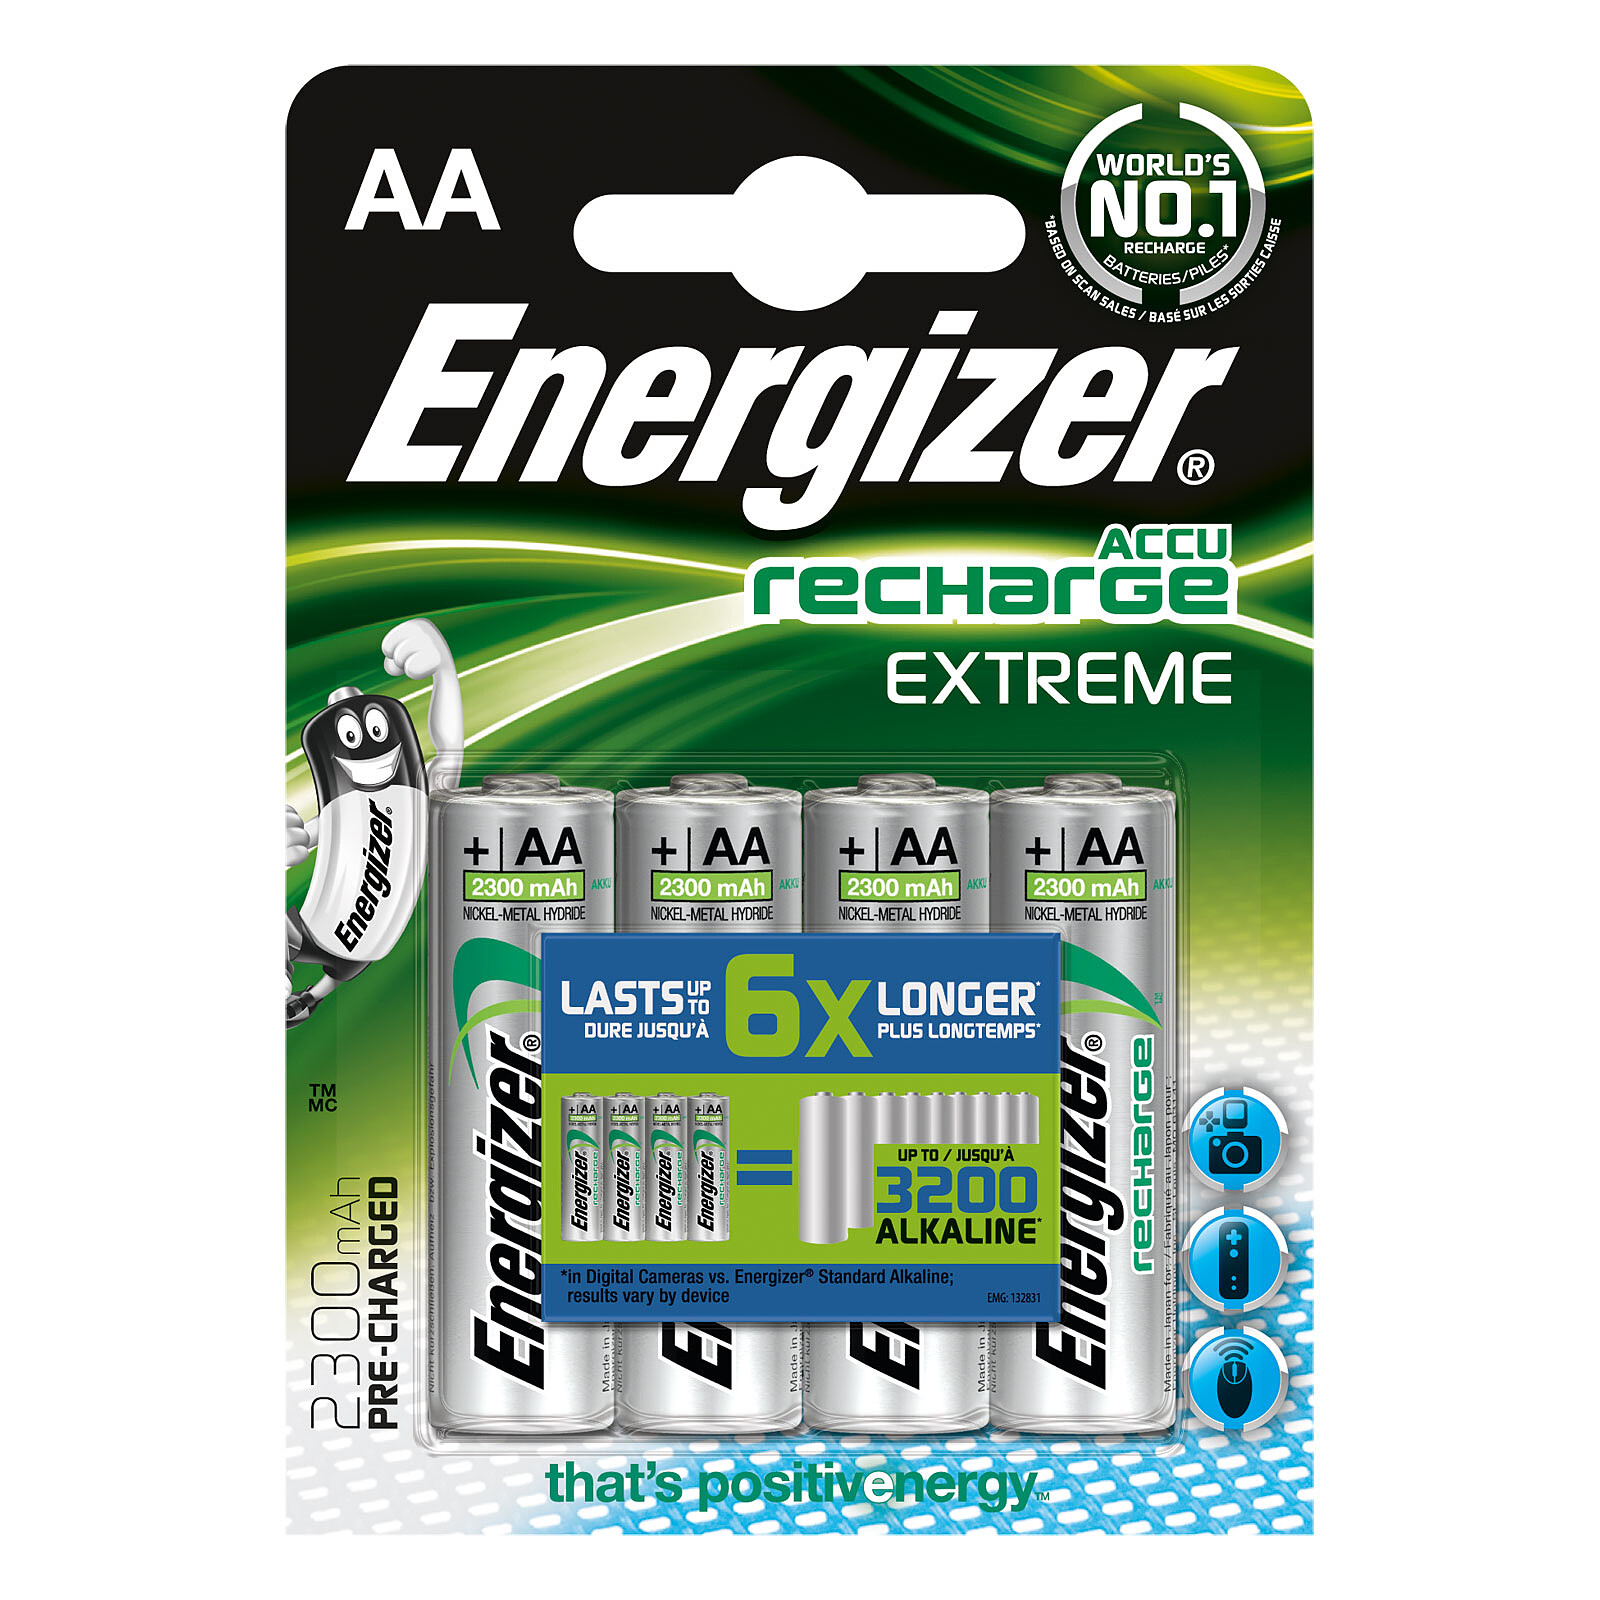 Energizer Accu Recharge Extreme AA 2300 mAh (set of 4)